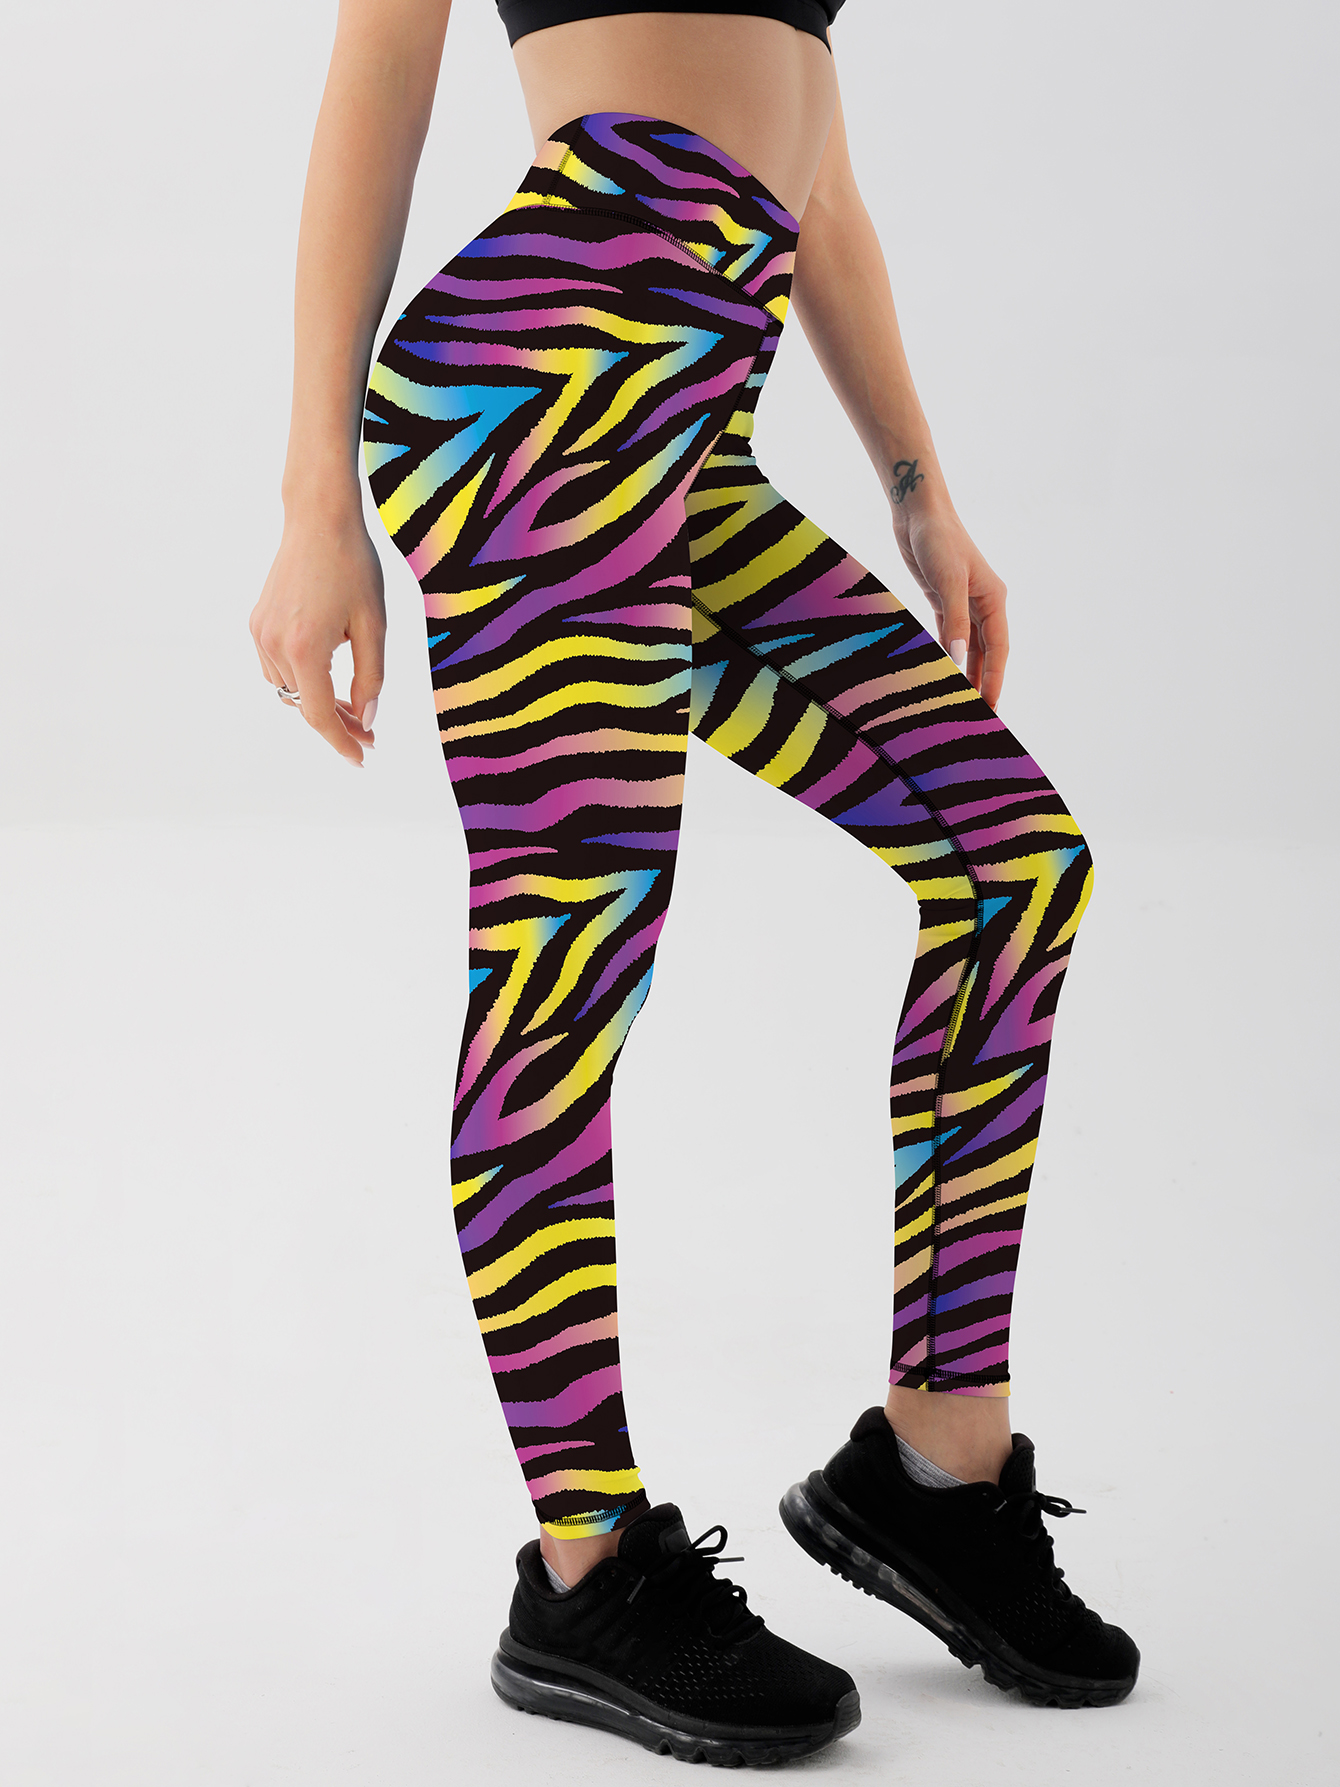 2021 sexy yoga pants fitness exercise base zebra pattern sports